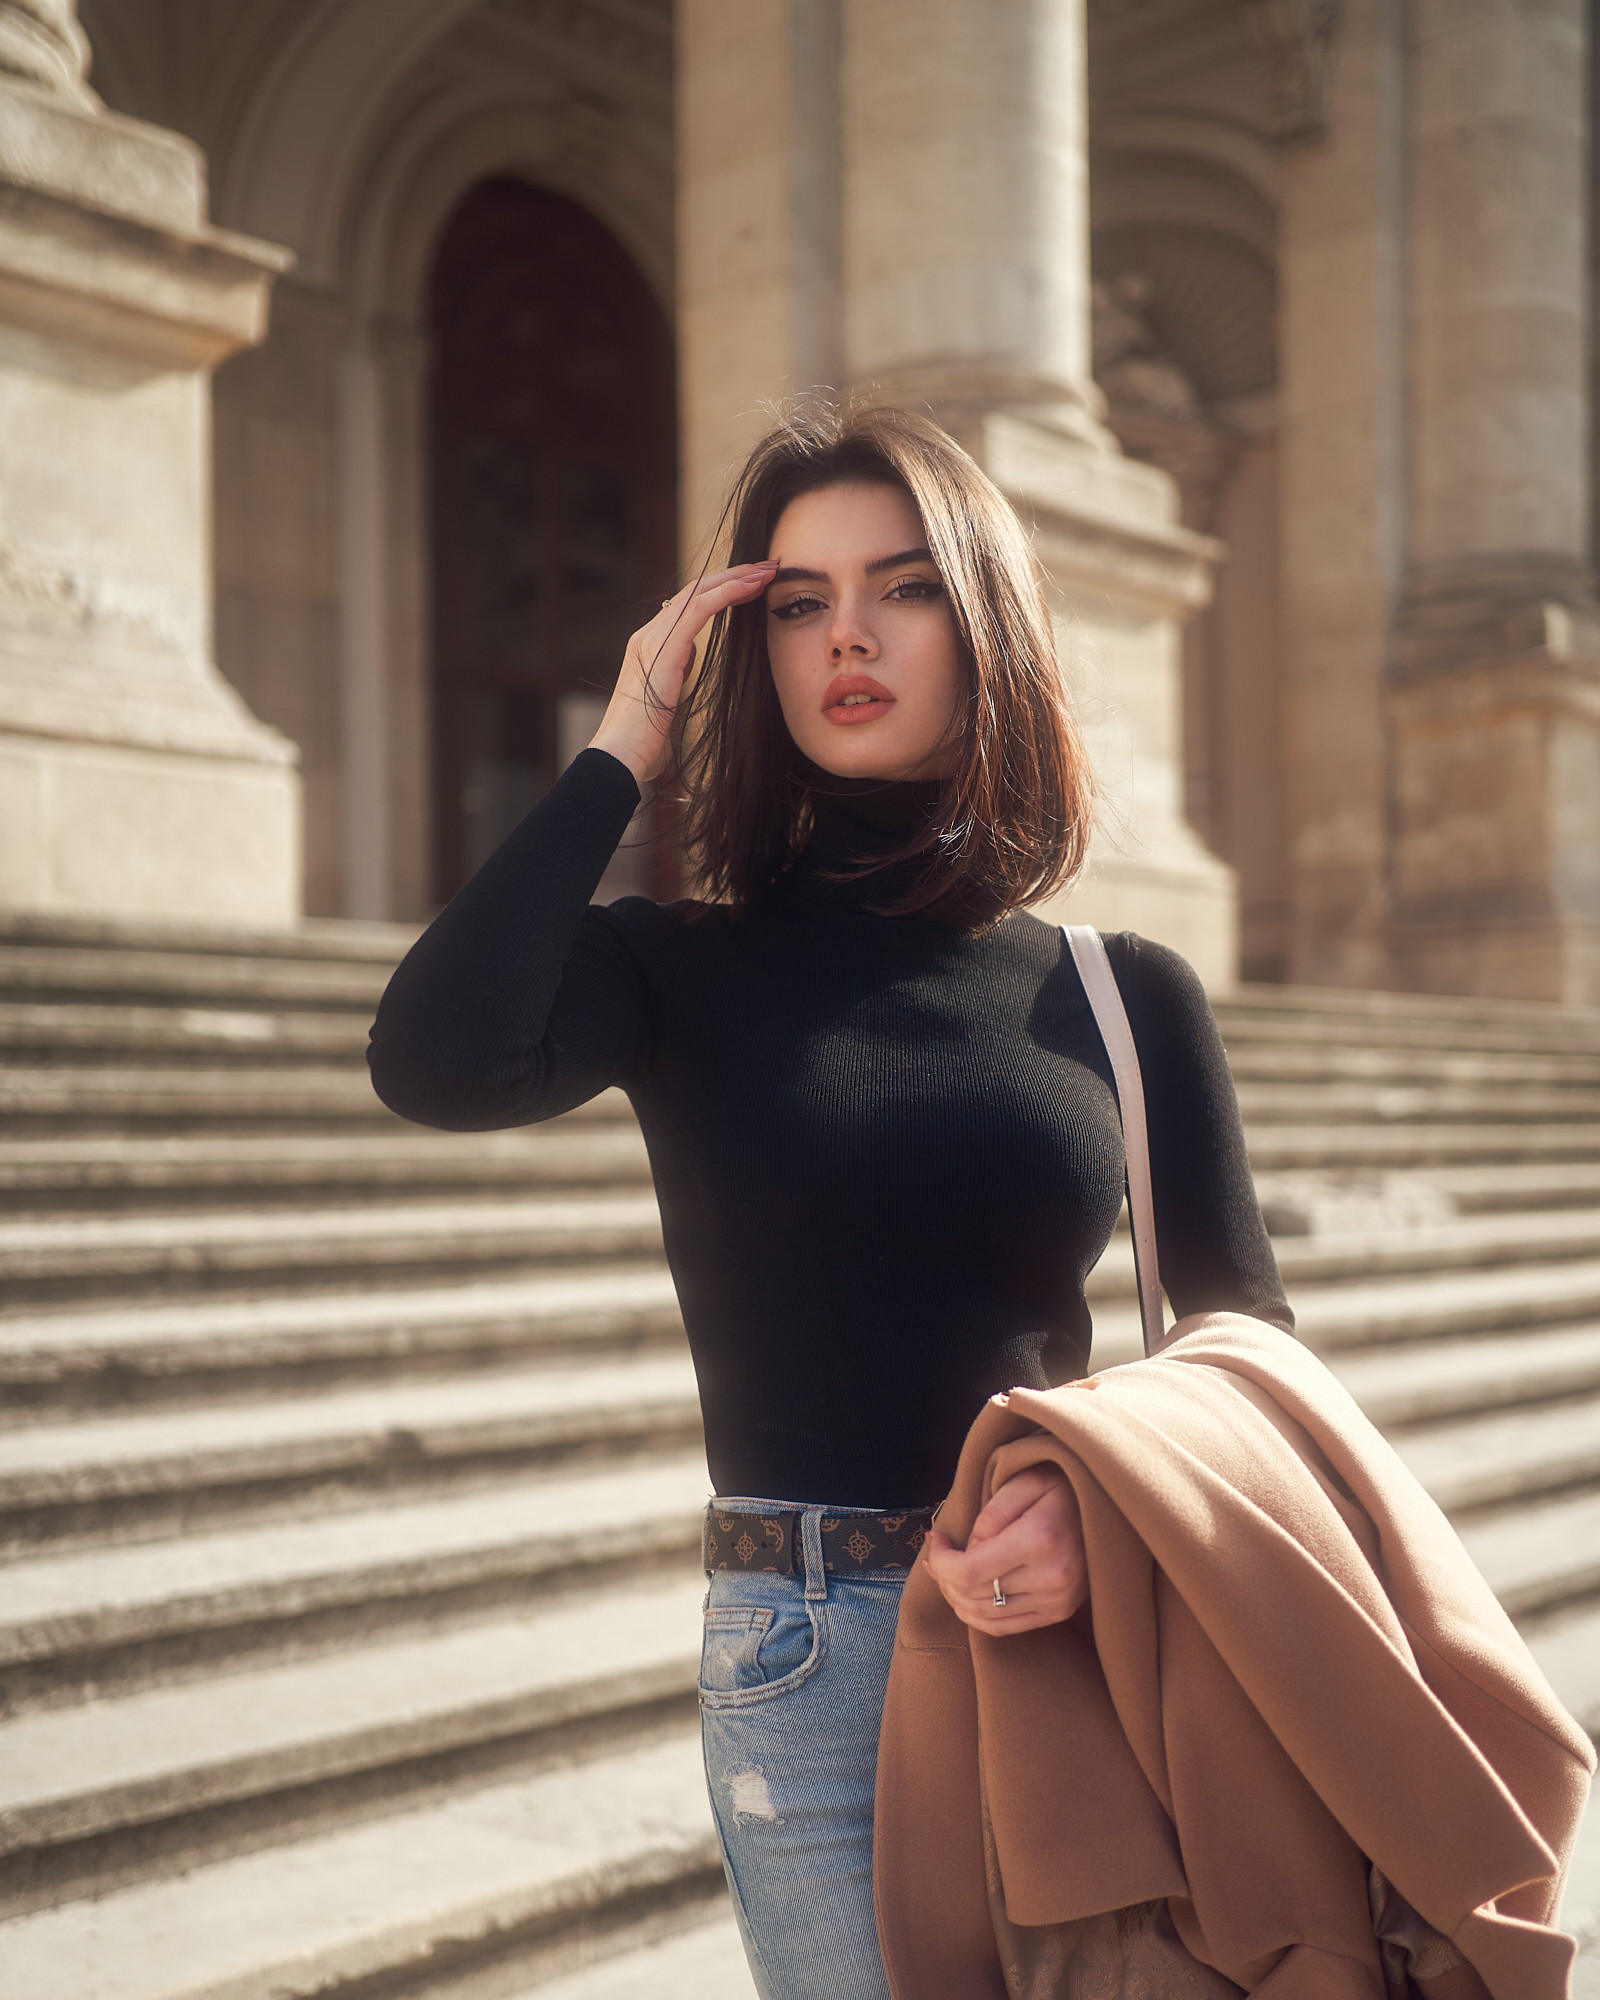 Andrei Marginean Women Brunette Shoulder Length Hair Black Clothing Coats Stairs Sunlight Brown Coat 1600x2000